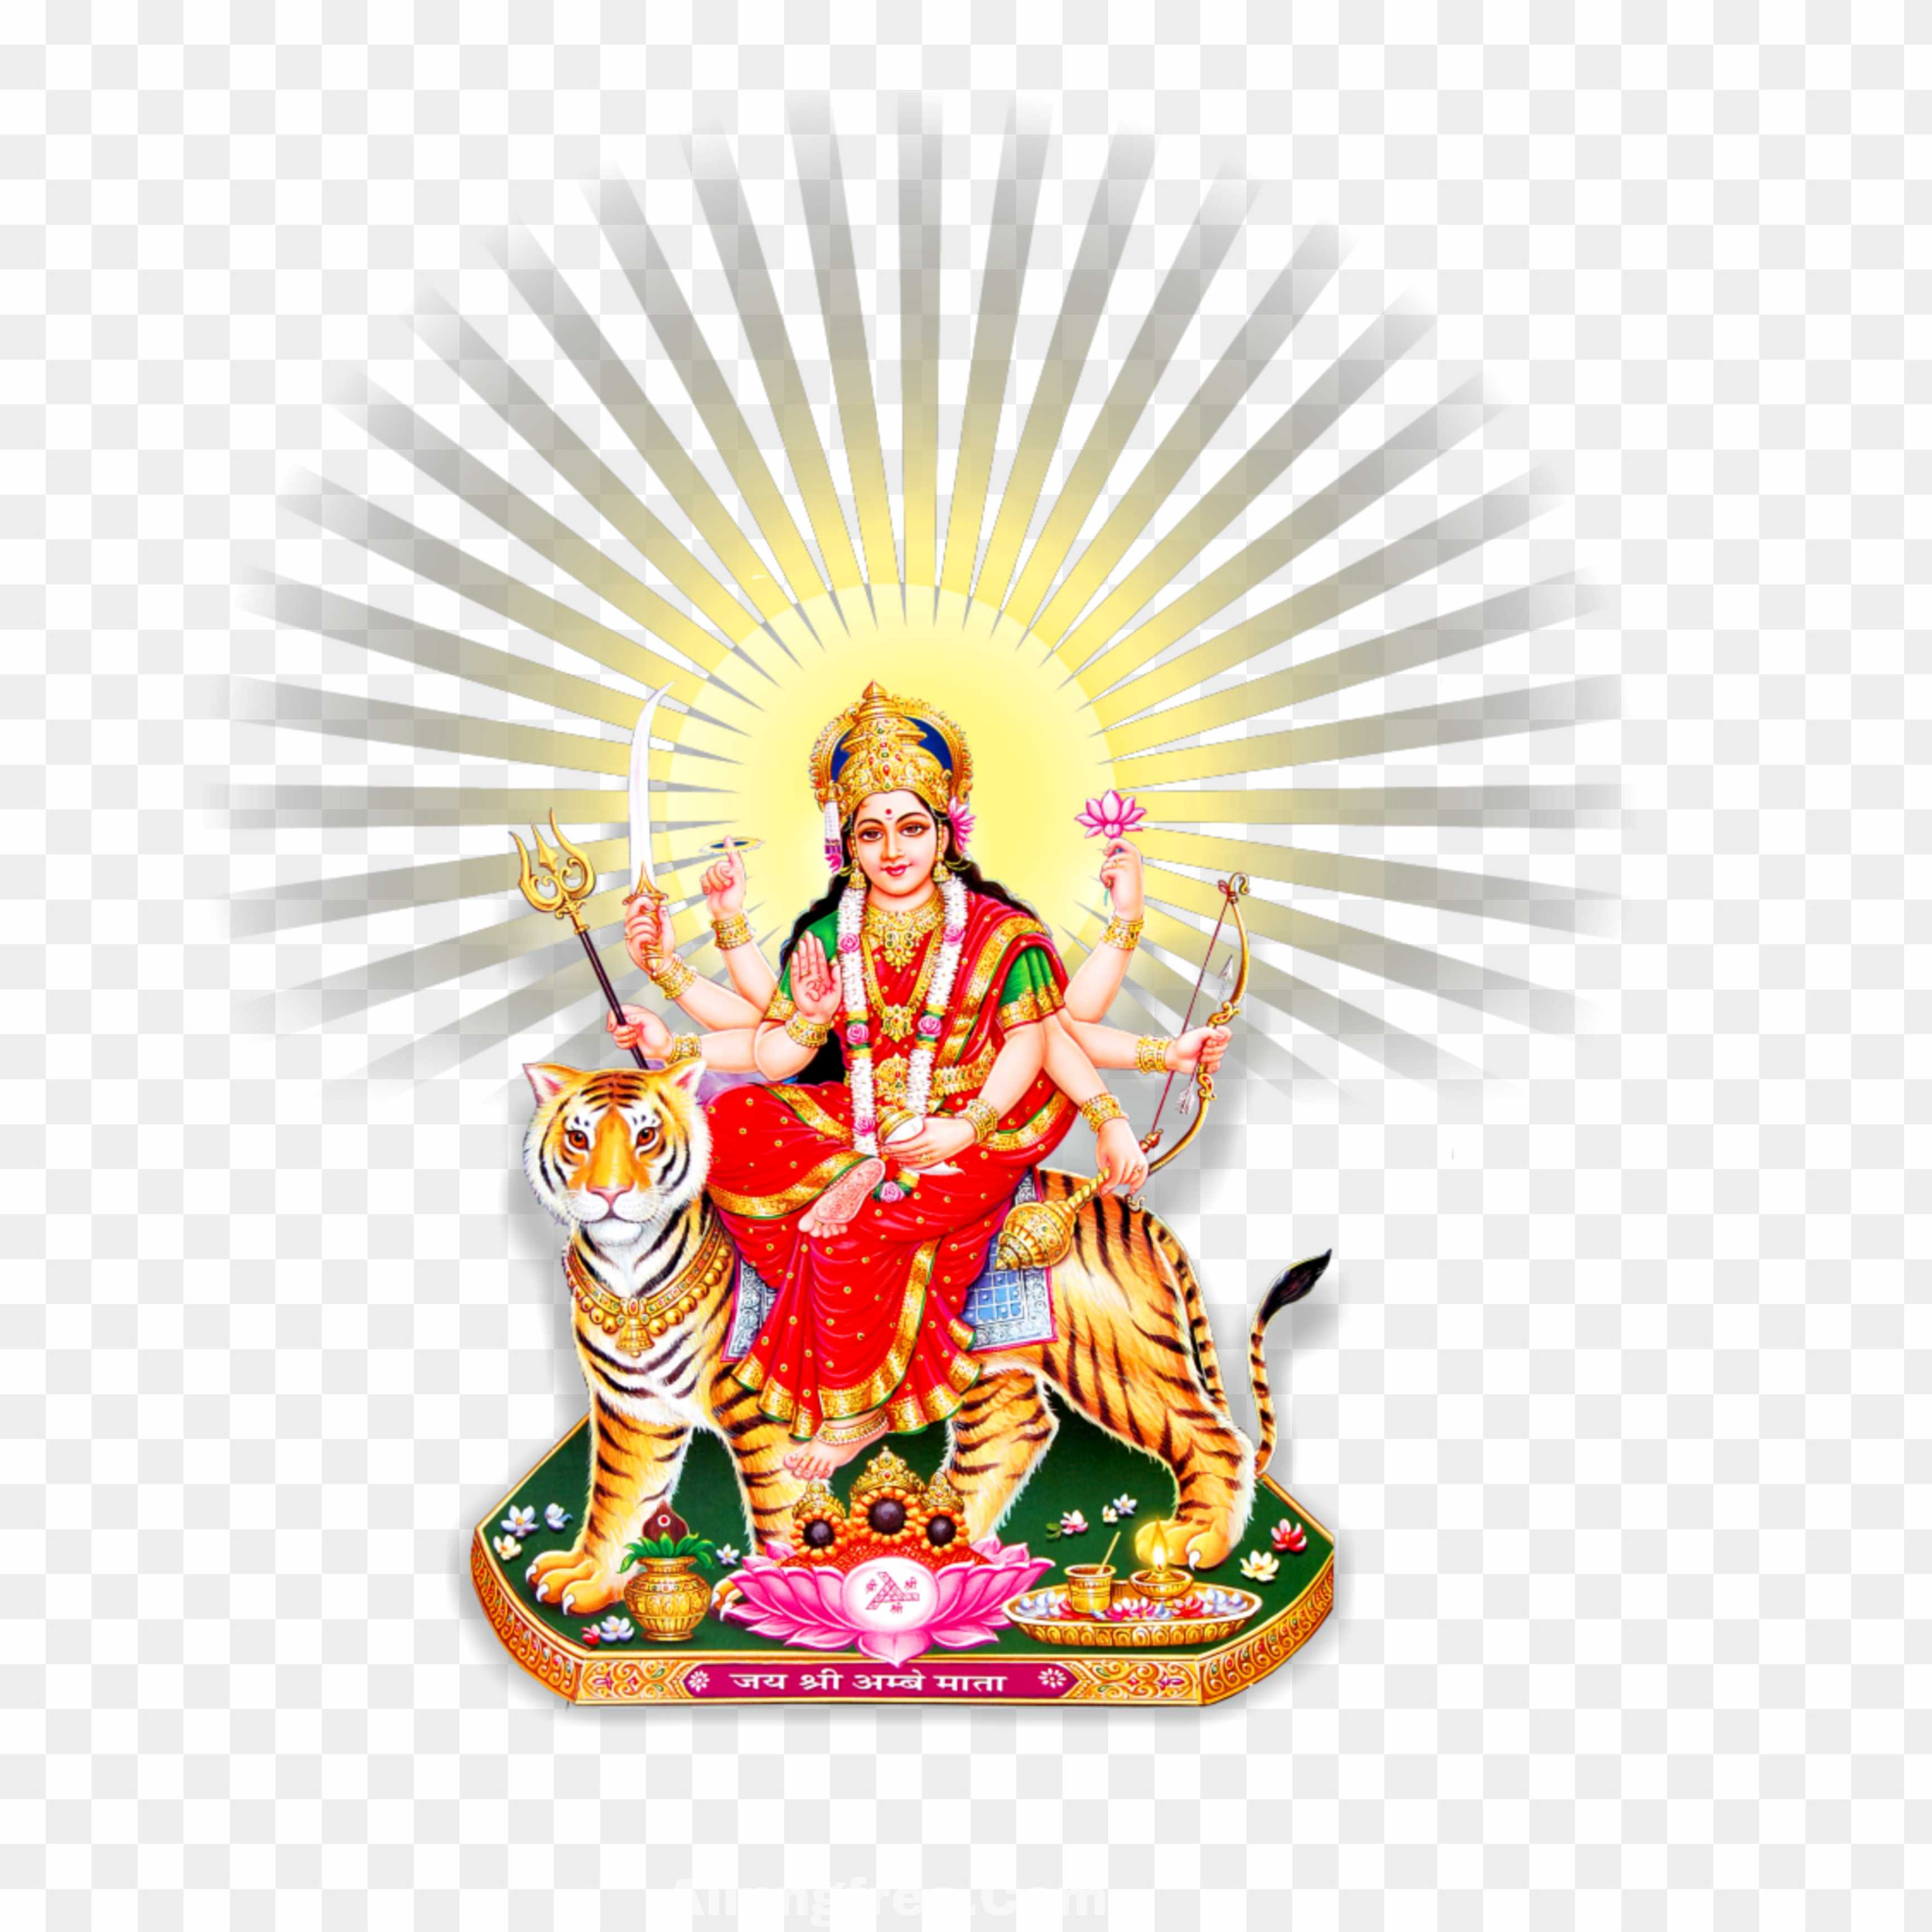 Maa Durga PNG HD Images Free download 